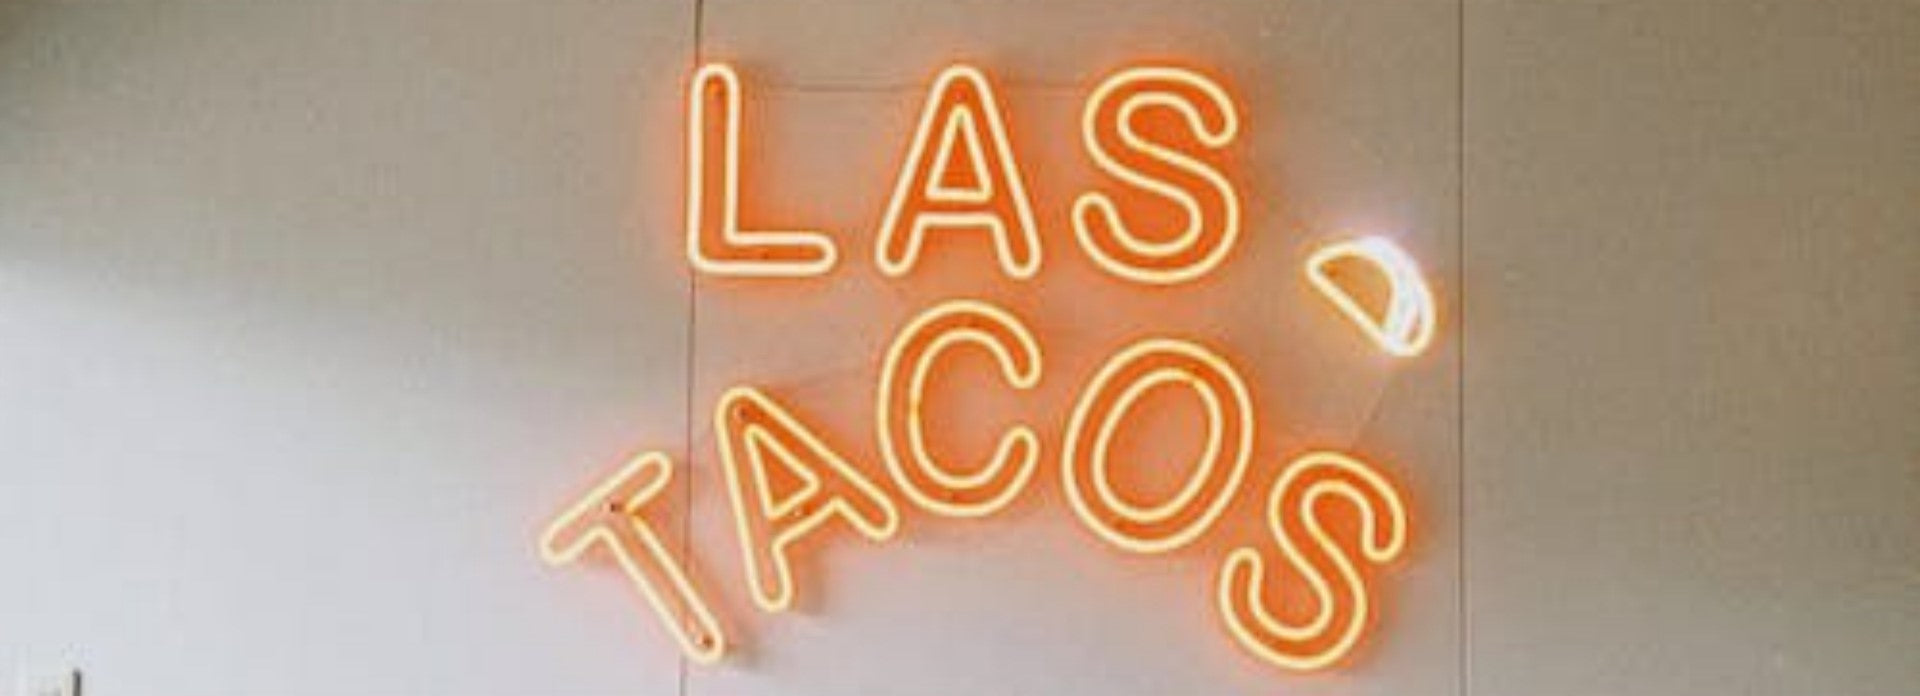 Revitalizing Tacos Restaurant